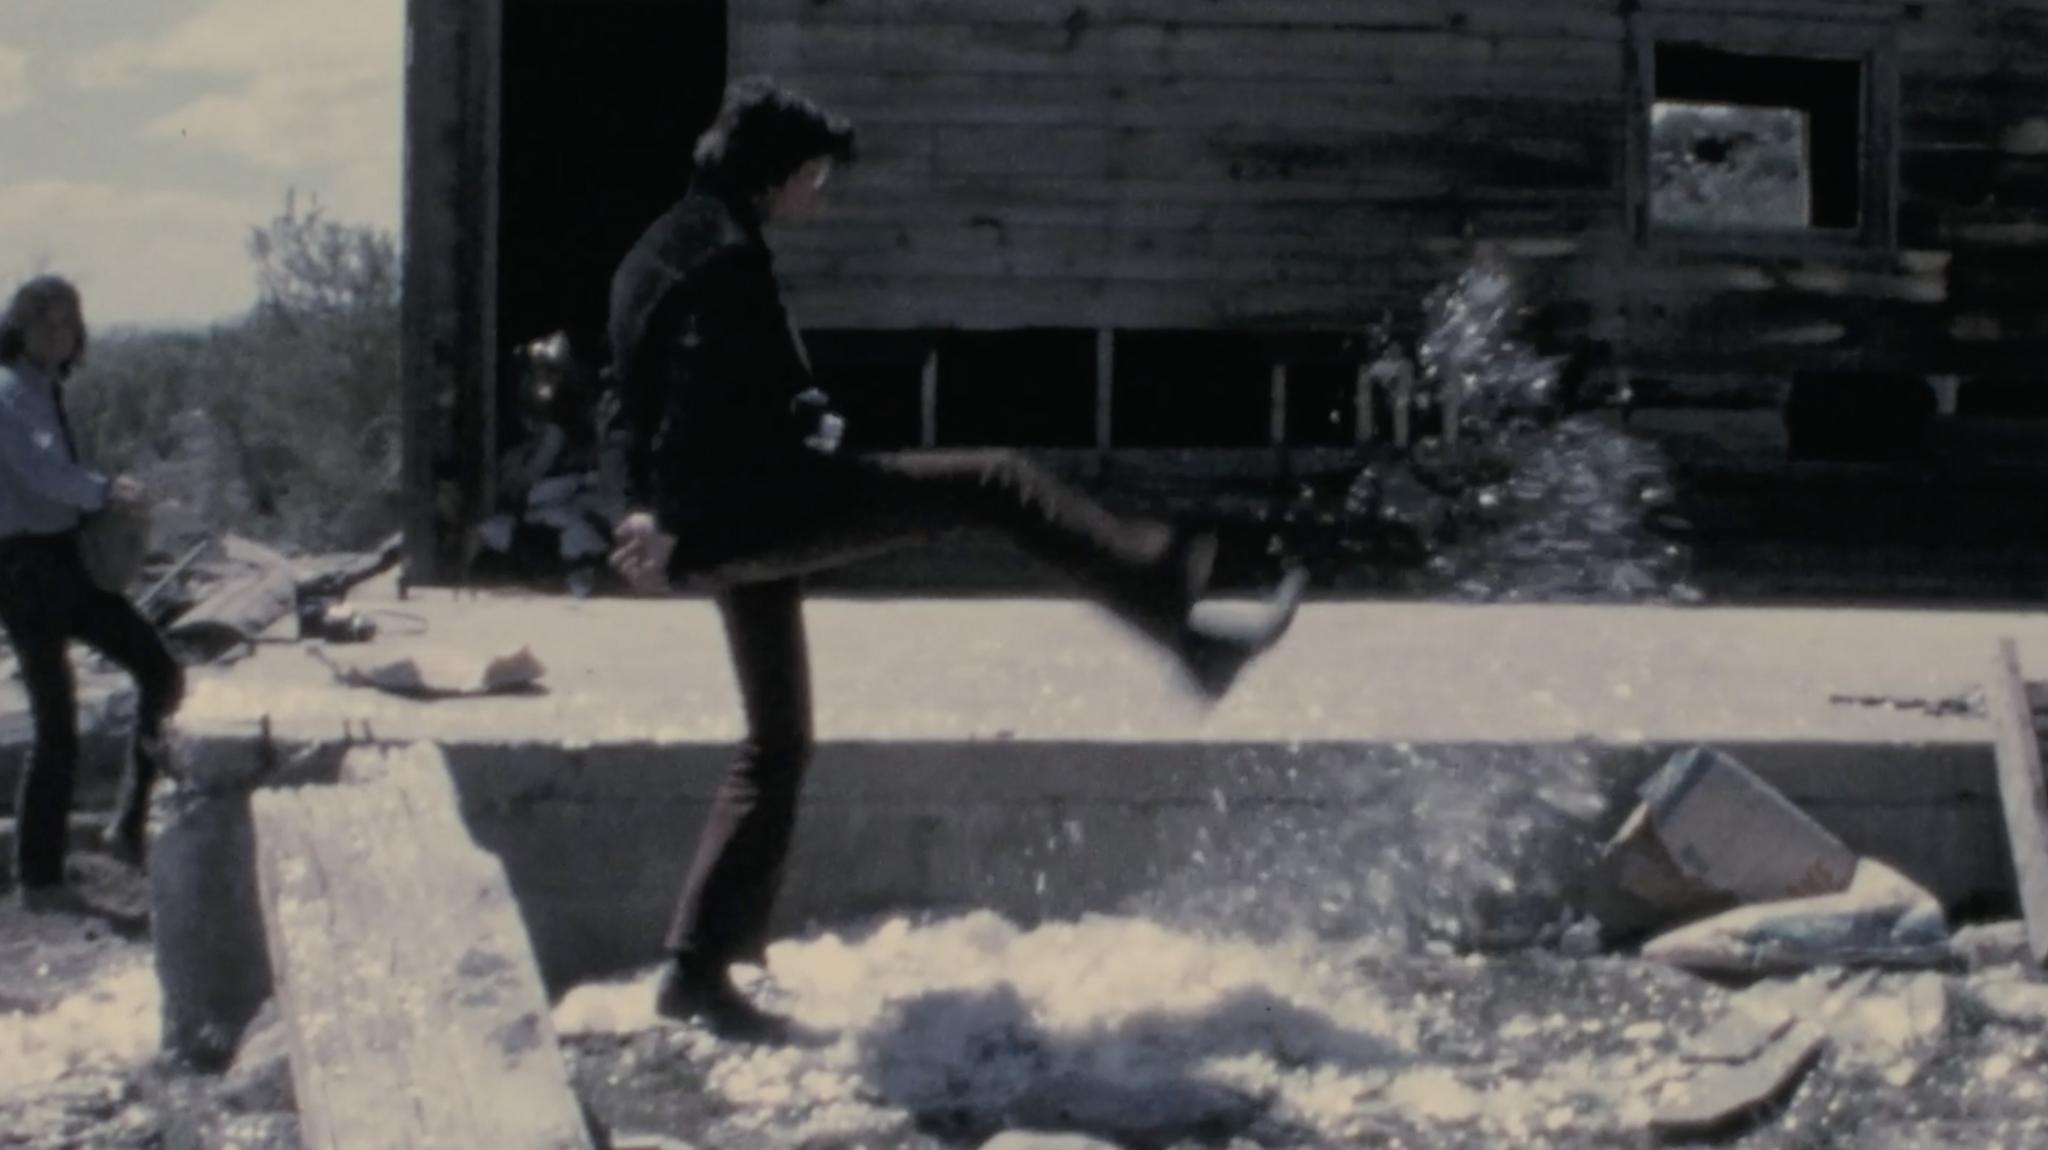 Robert Smithson kicking mica into the air